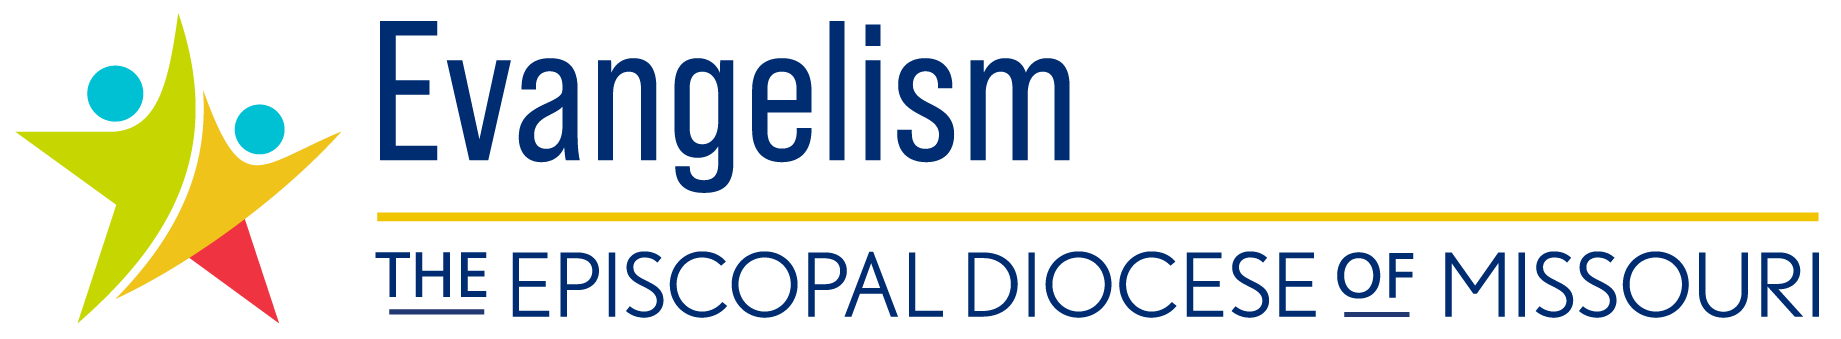 evangelism-logo-rgb_606